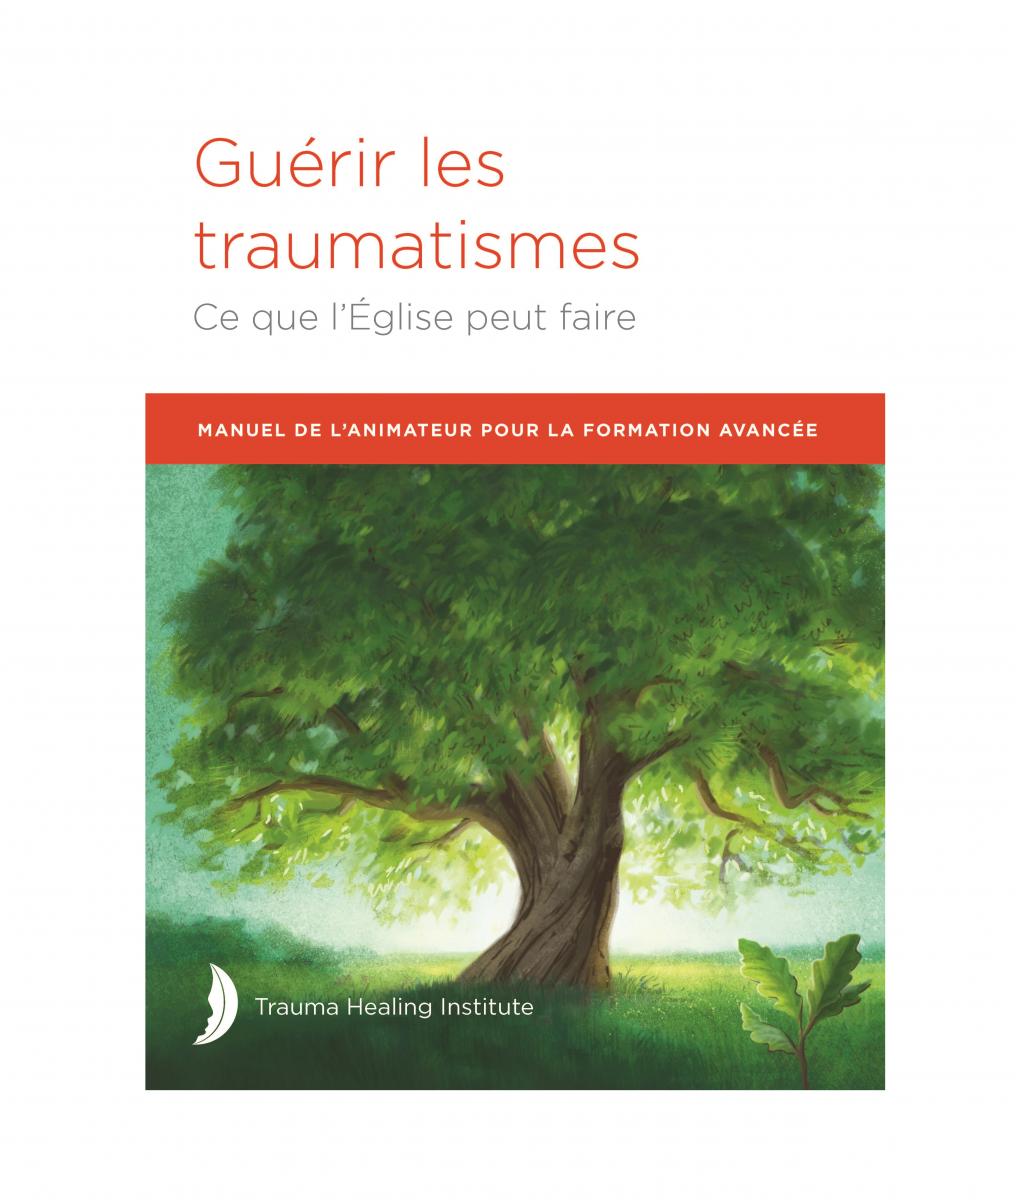 Guérir les traumatismes: Manuel de L'animateur pour la Formation Avancée edição 2021 - Impressão sob demanda